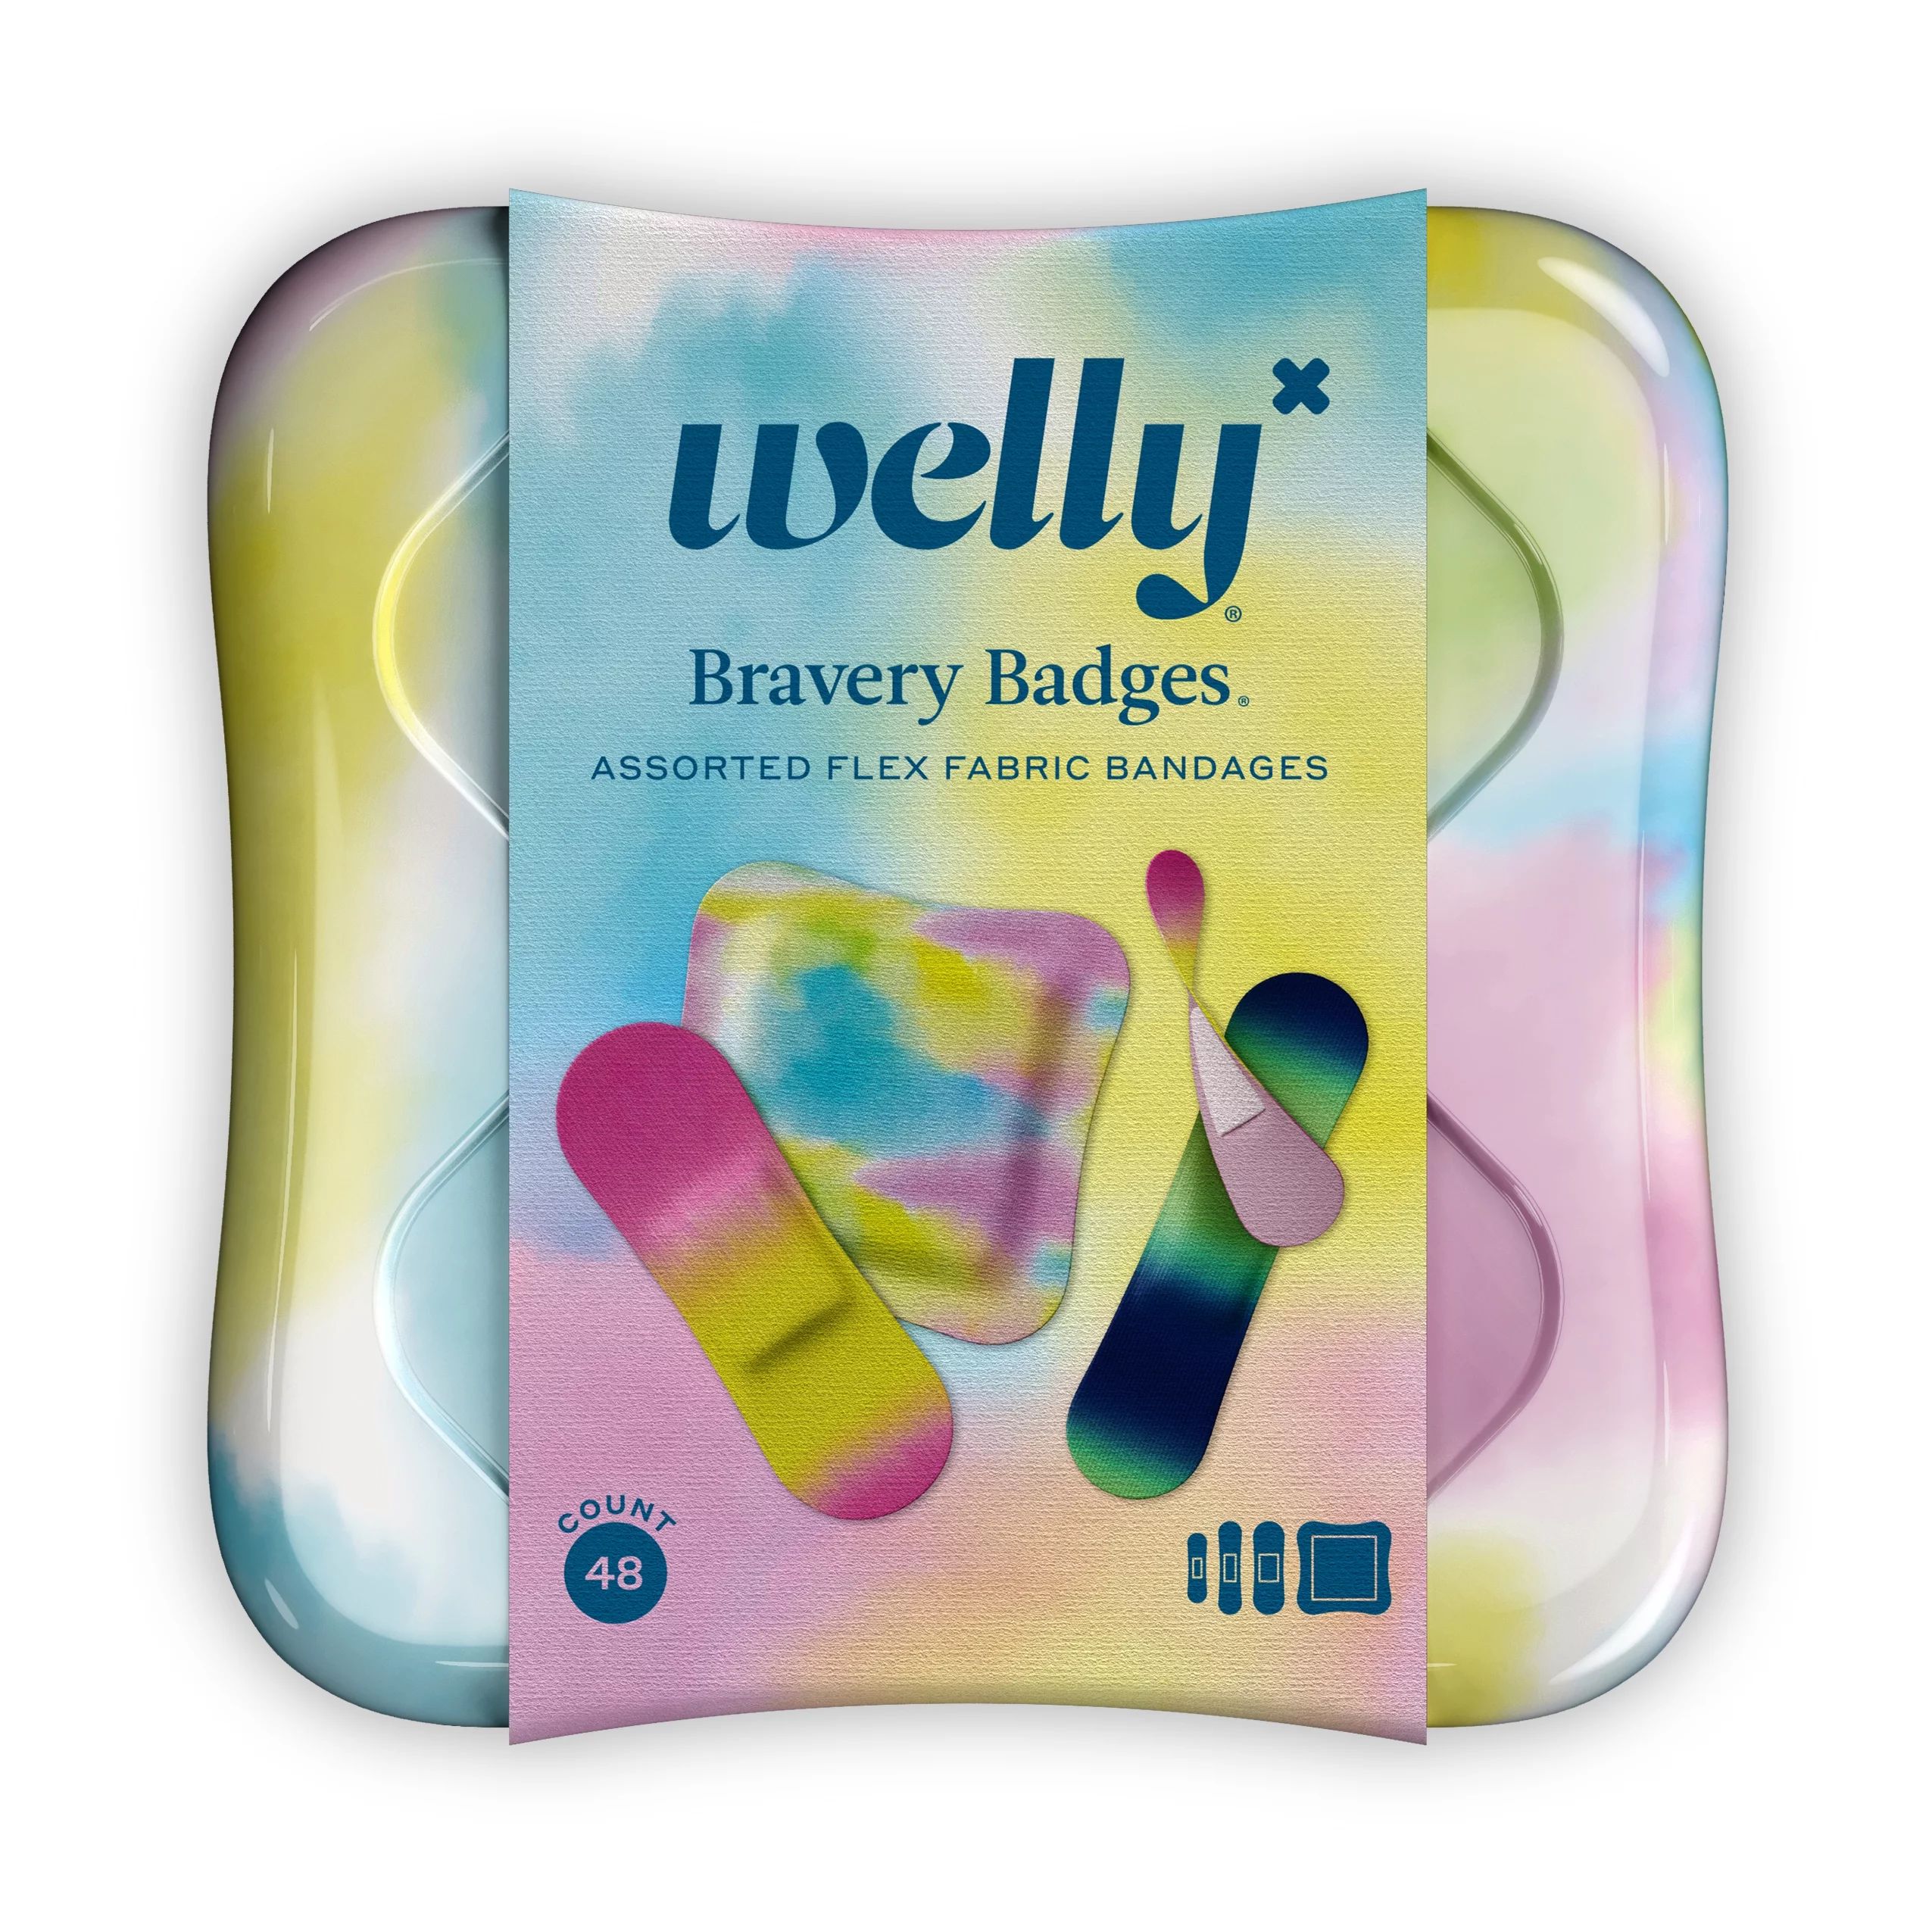 Welly Bravery Badges Assorted Colorwash, 48 bandages | Walmart (US)